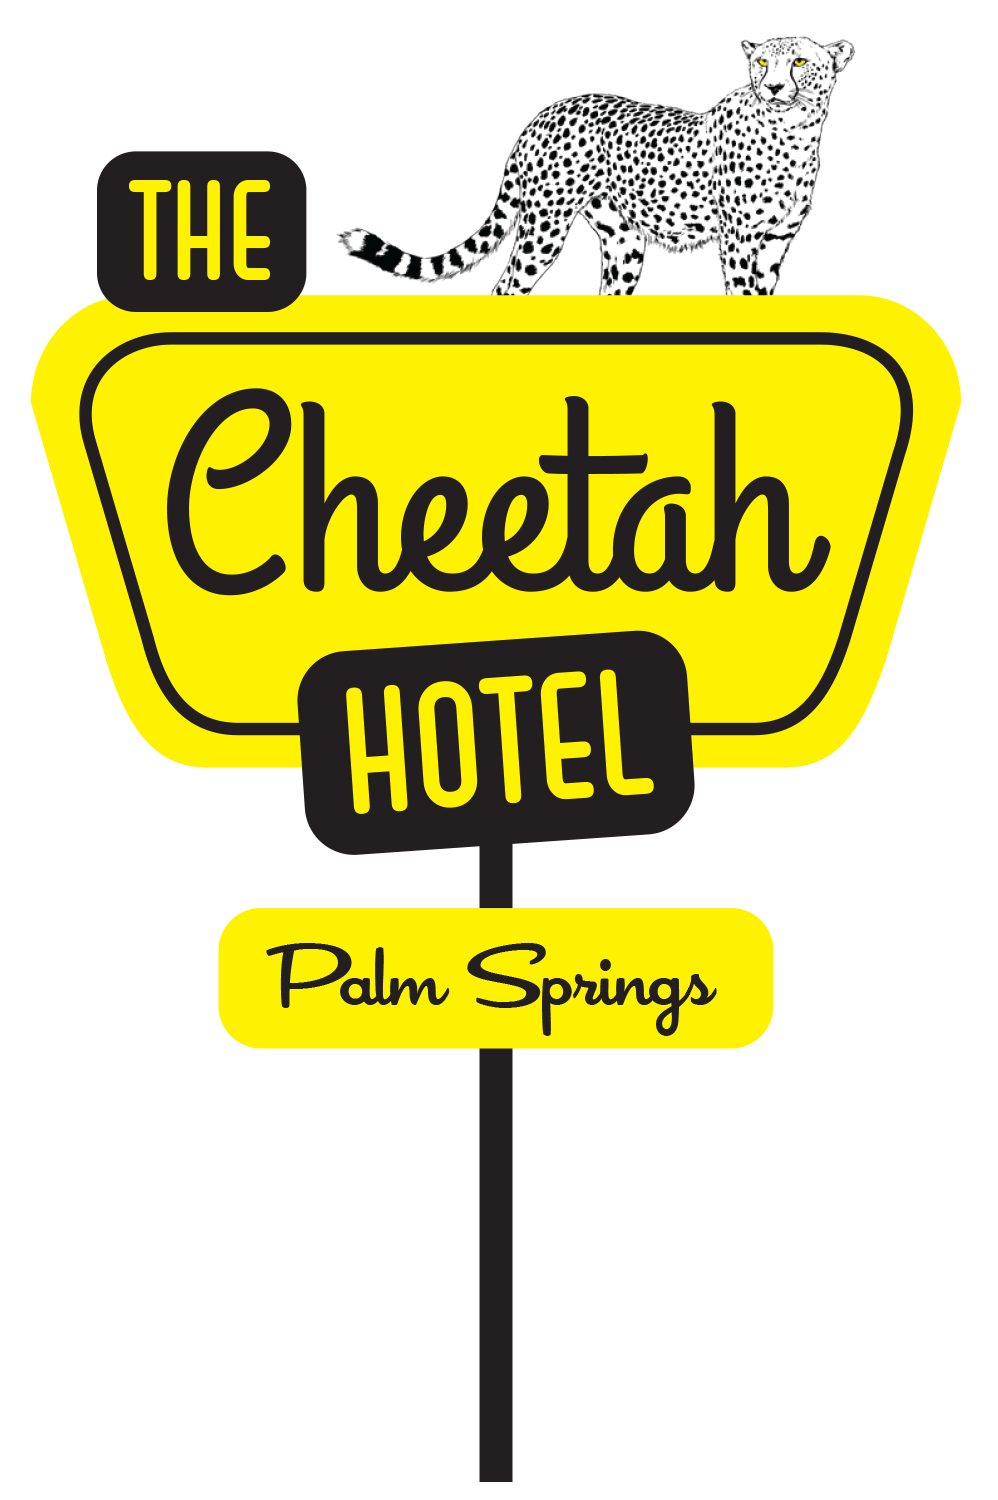 The Cheetah Hotel Palm Springs